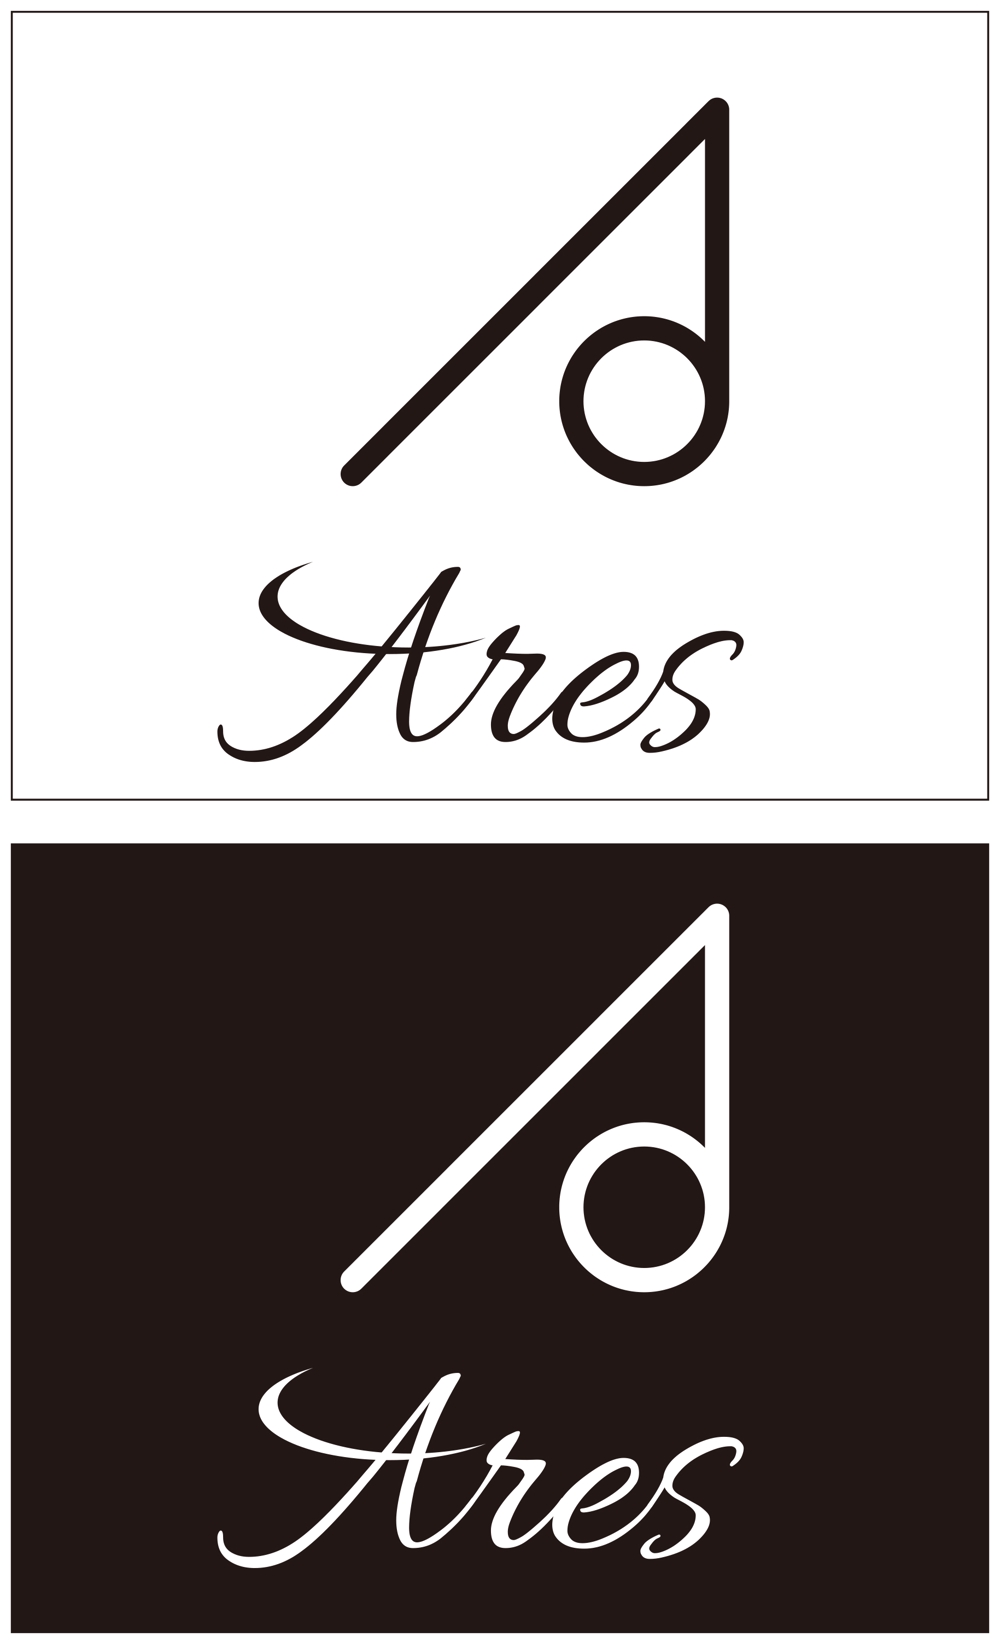 Ares-001 3.jpg